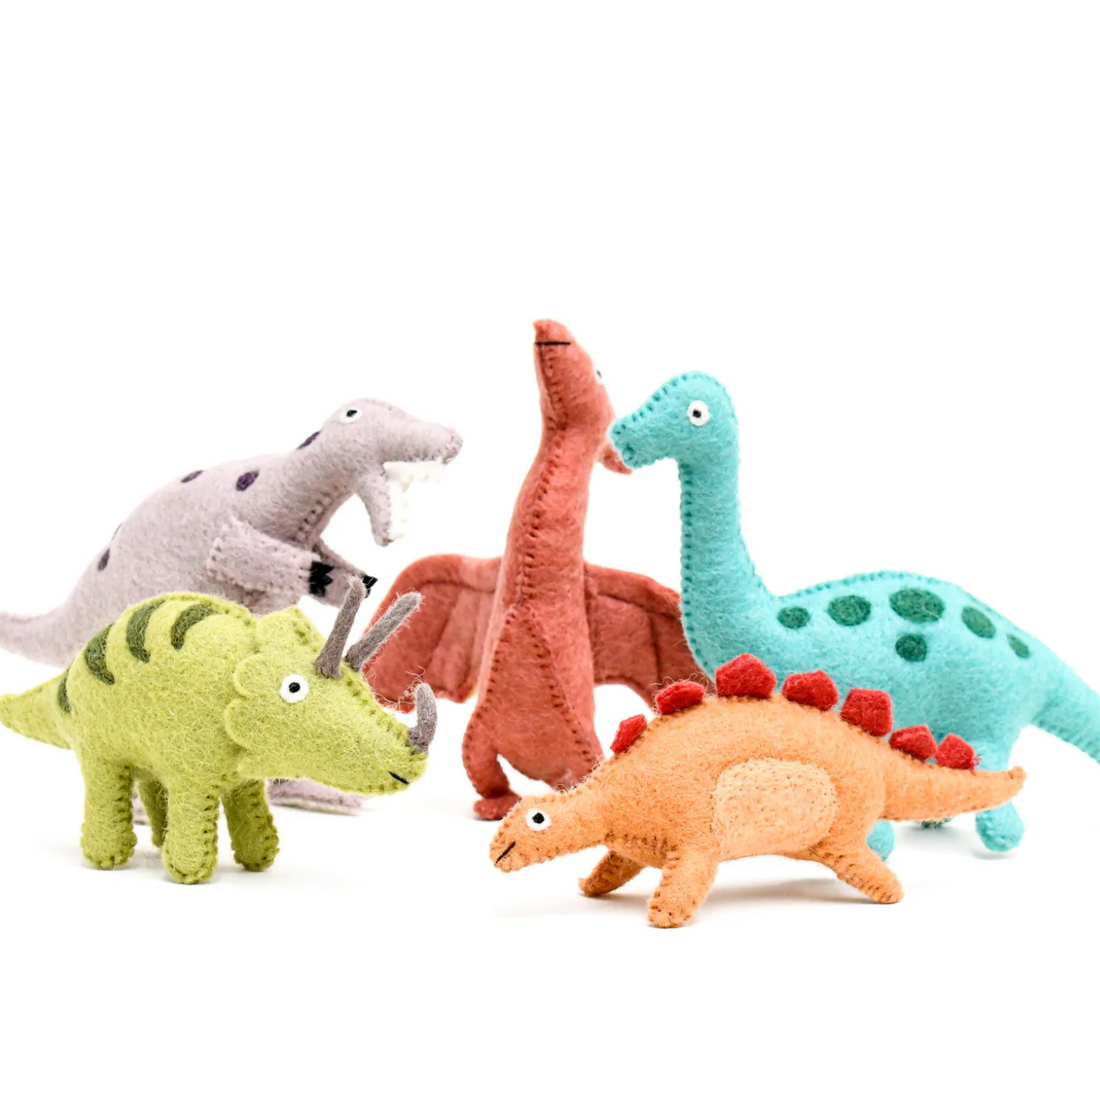 Tara Treasures Felt Brachiosaurus Dinosaur Toy